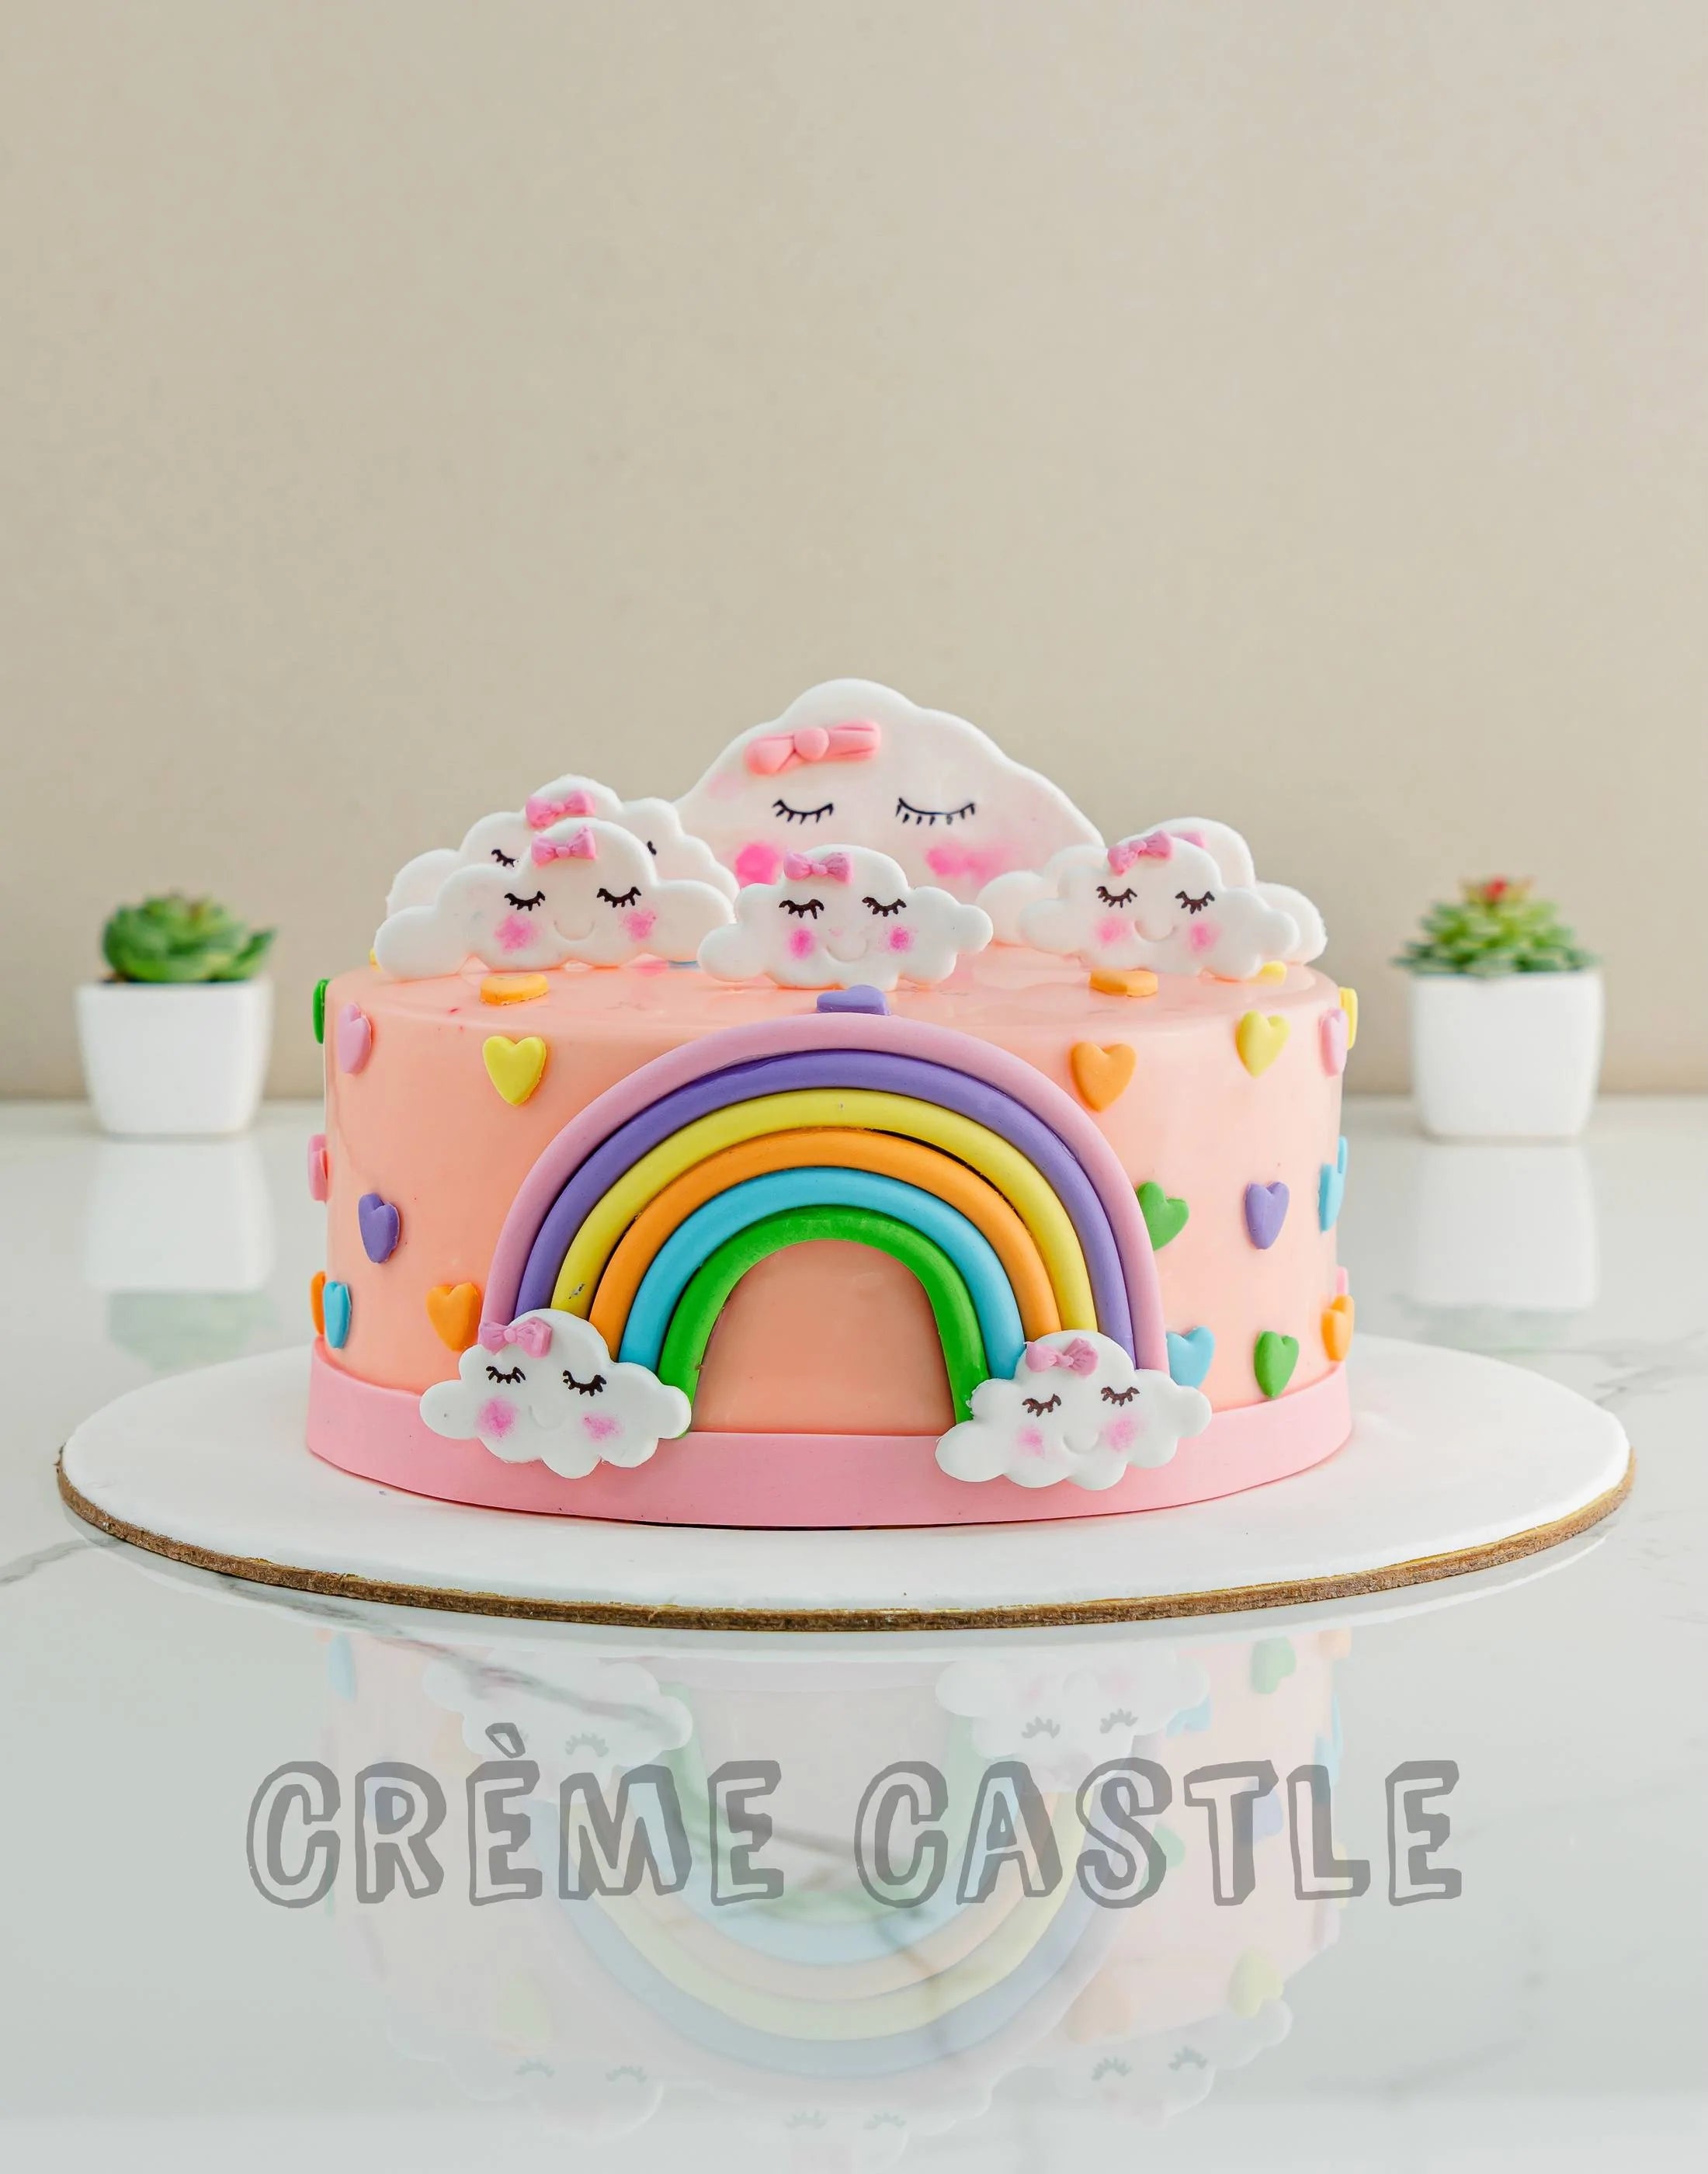 Little Girl and Rainbow Theme Cake